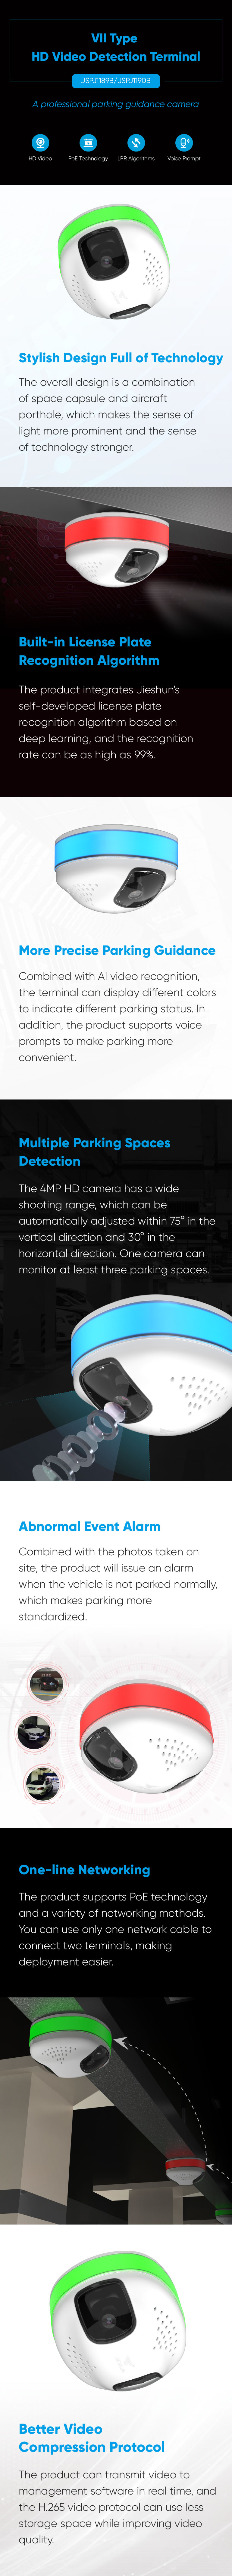 Video Detection Camera.jpg